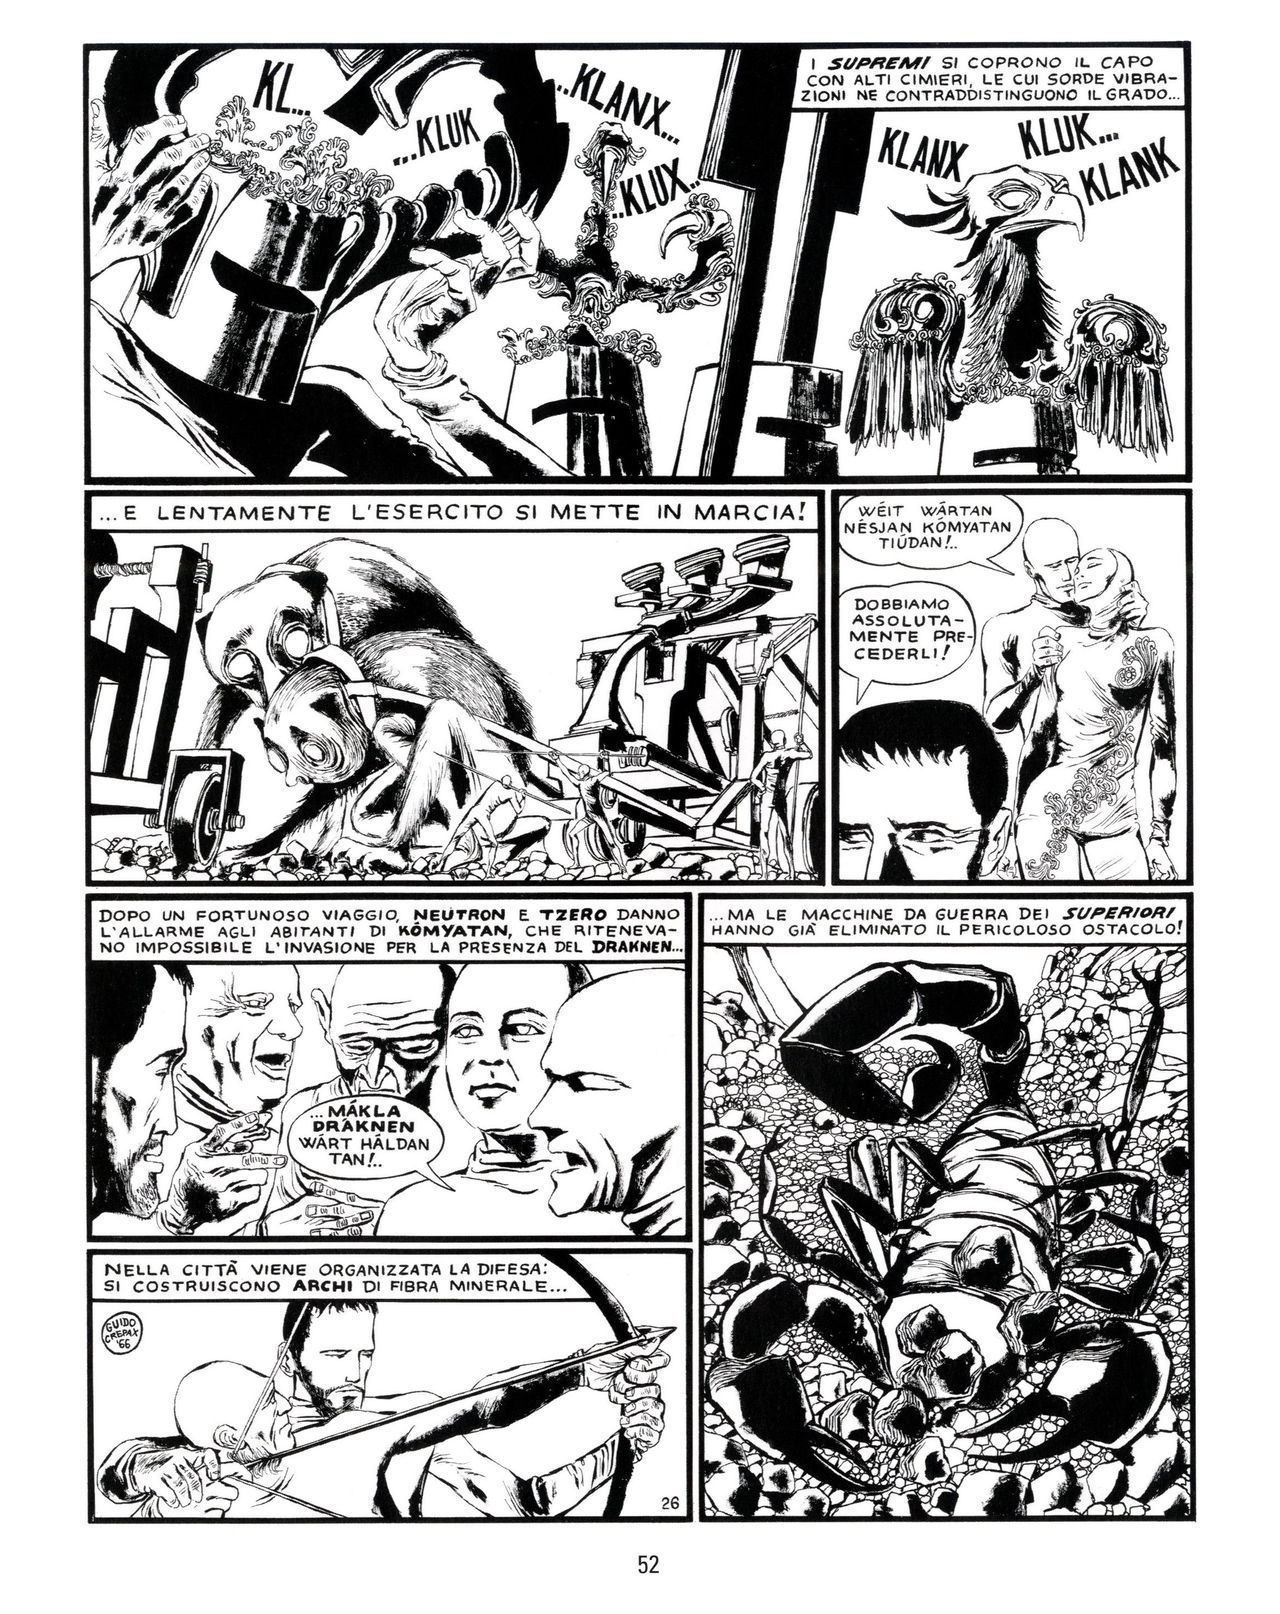 [Guido Crepax] Erotica Fumetti #25 : L'ascesa dei sotterranei : I cavalieri ciechi [Italian] 53